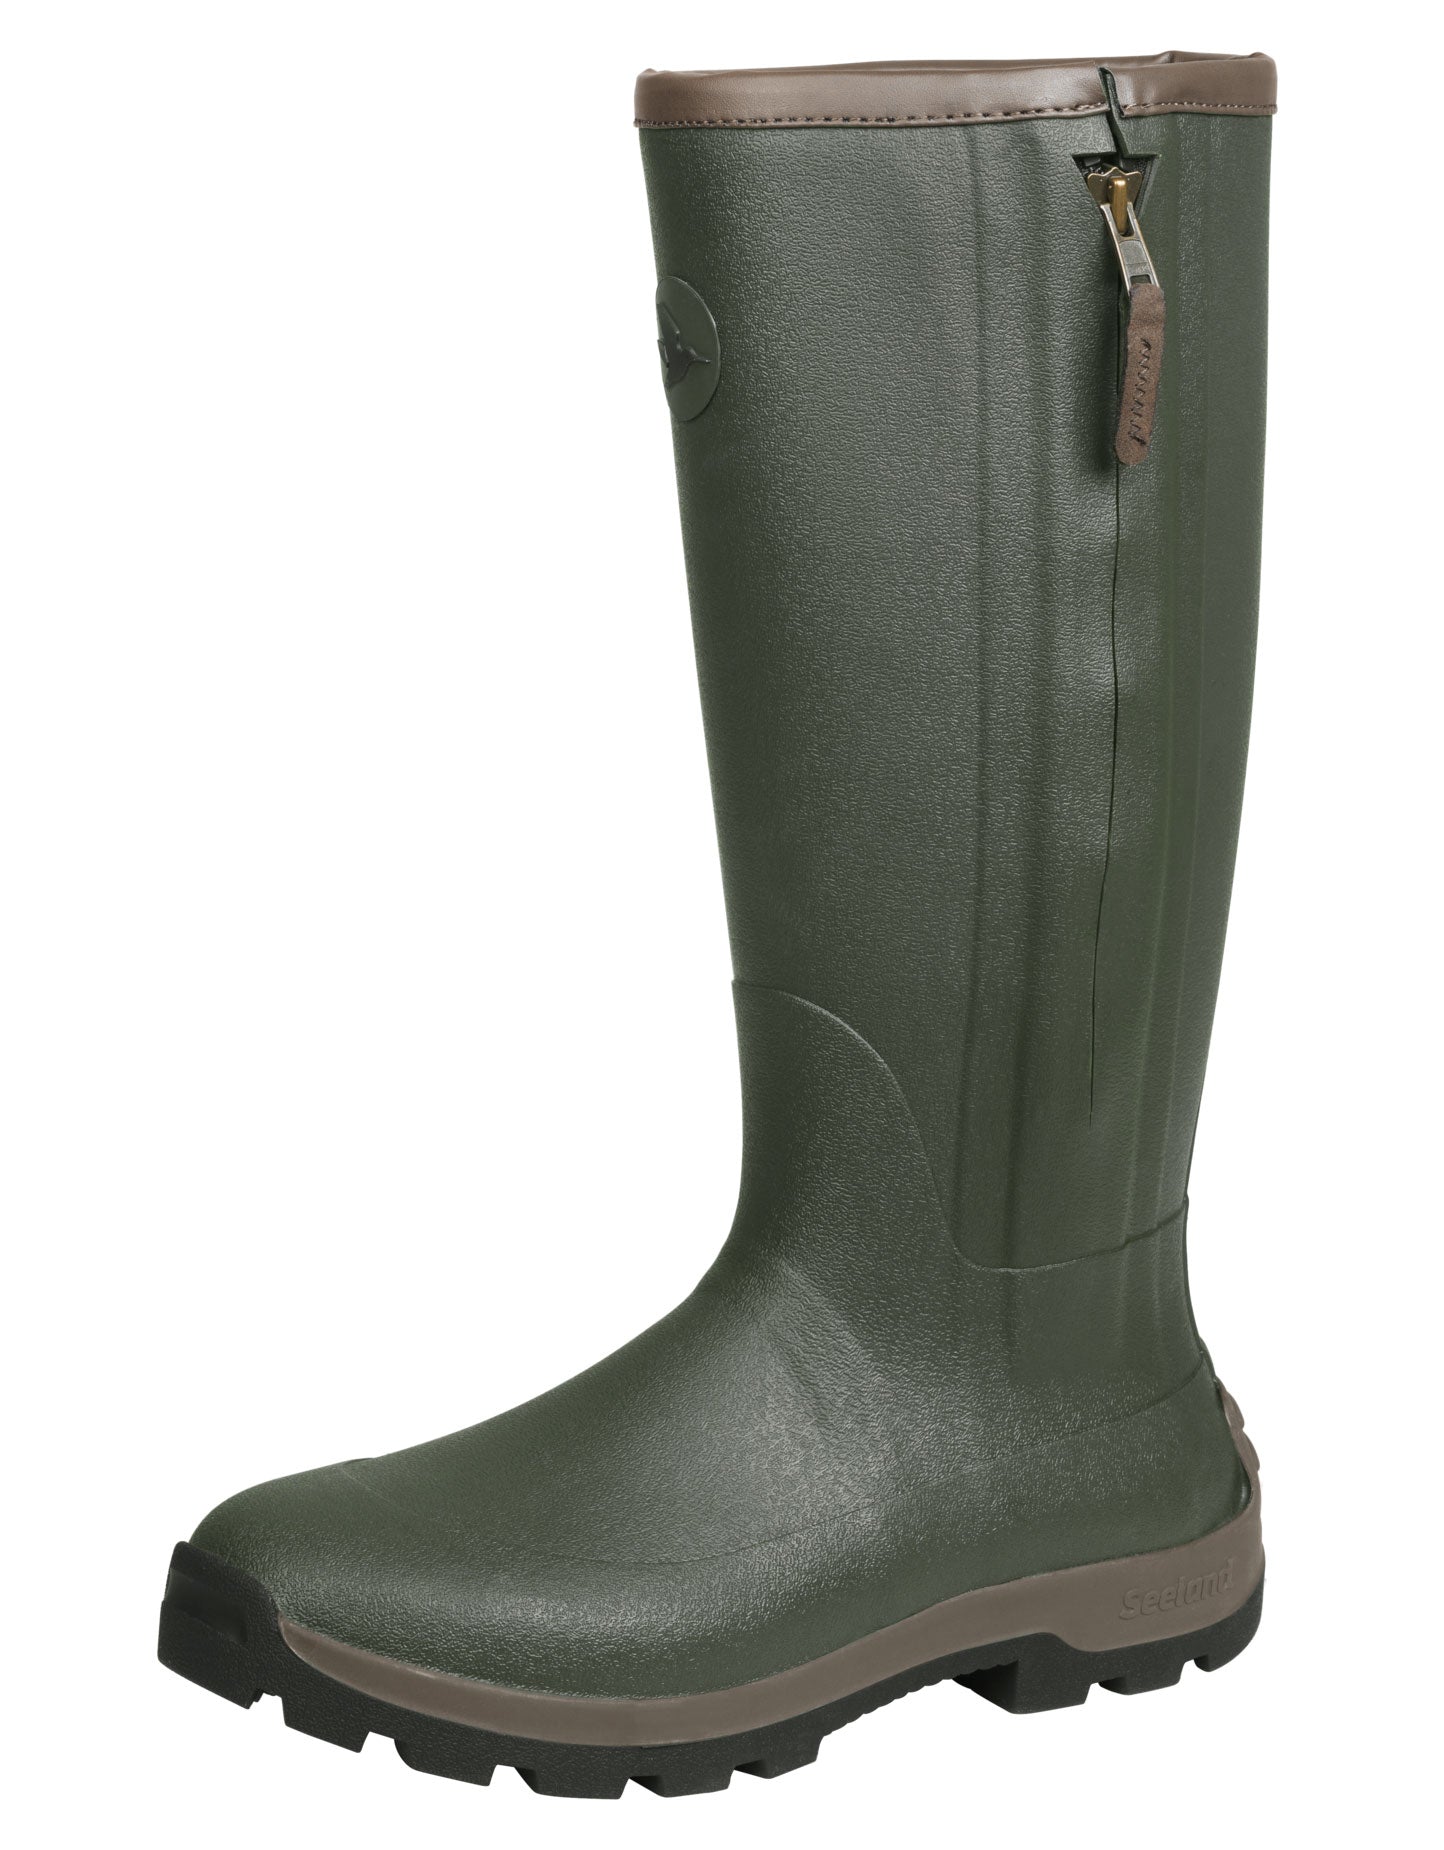 Seeland Noble Zip Insulated Wellington Boots